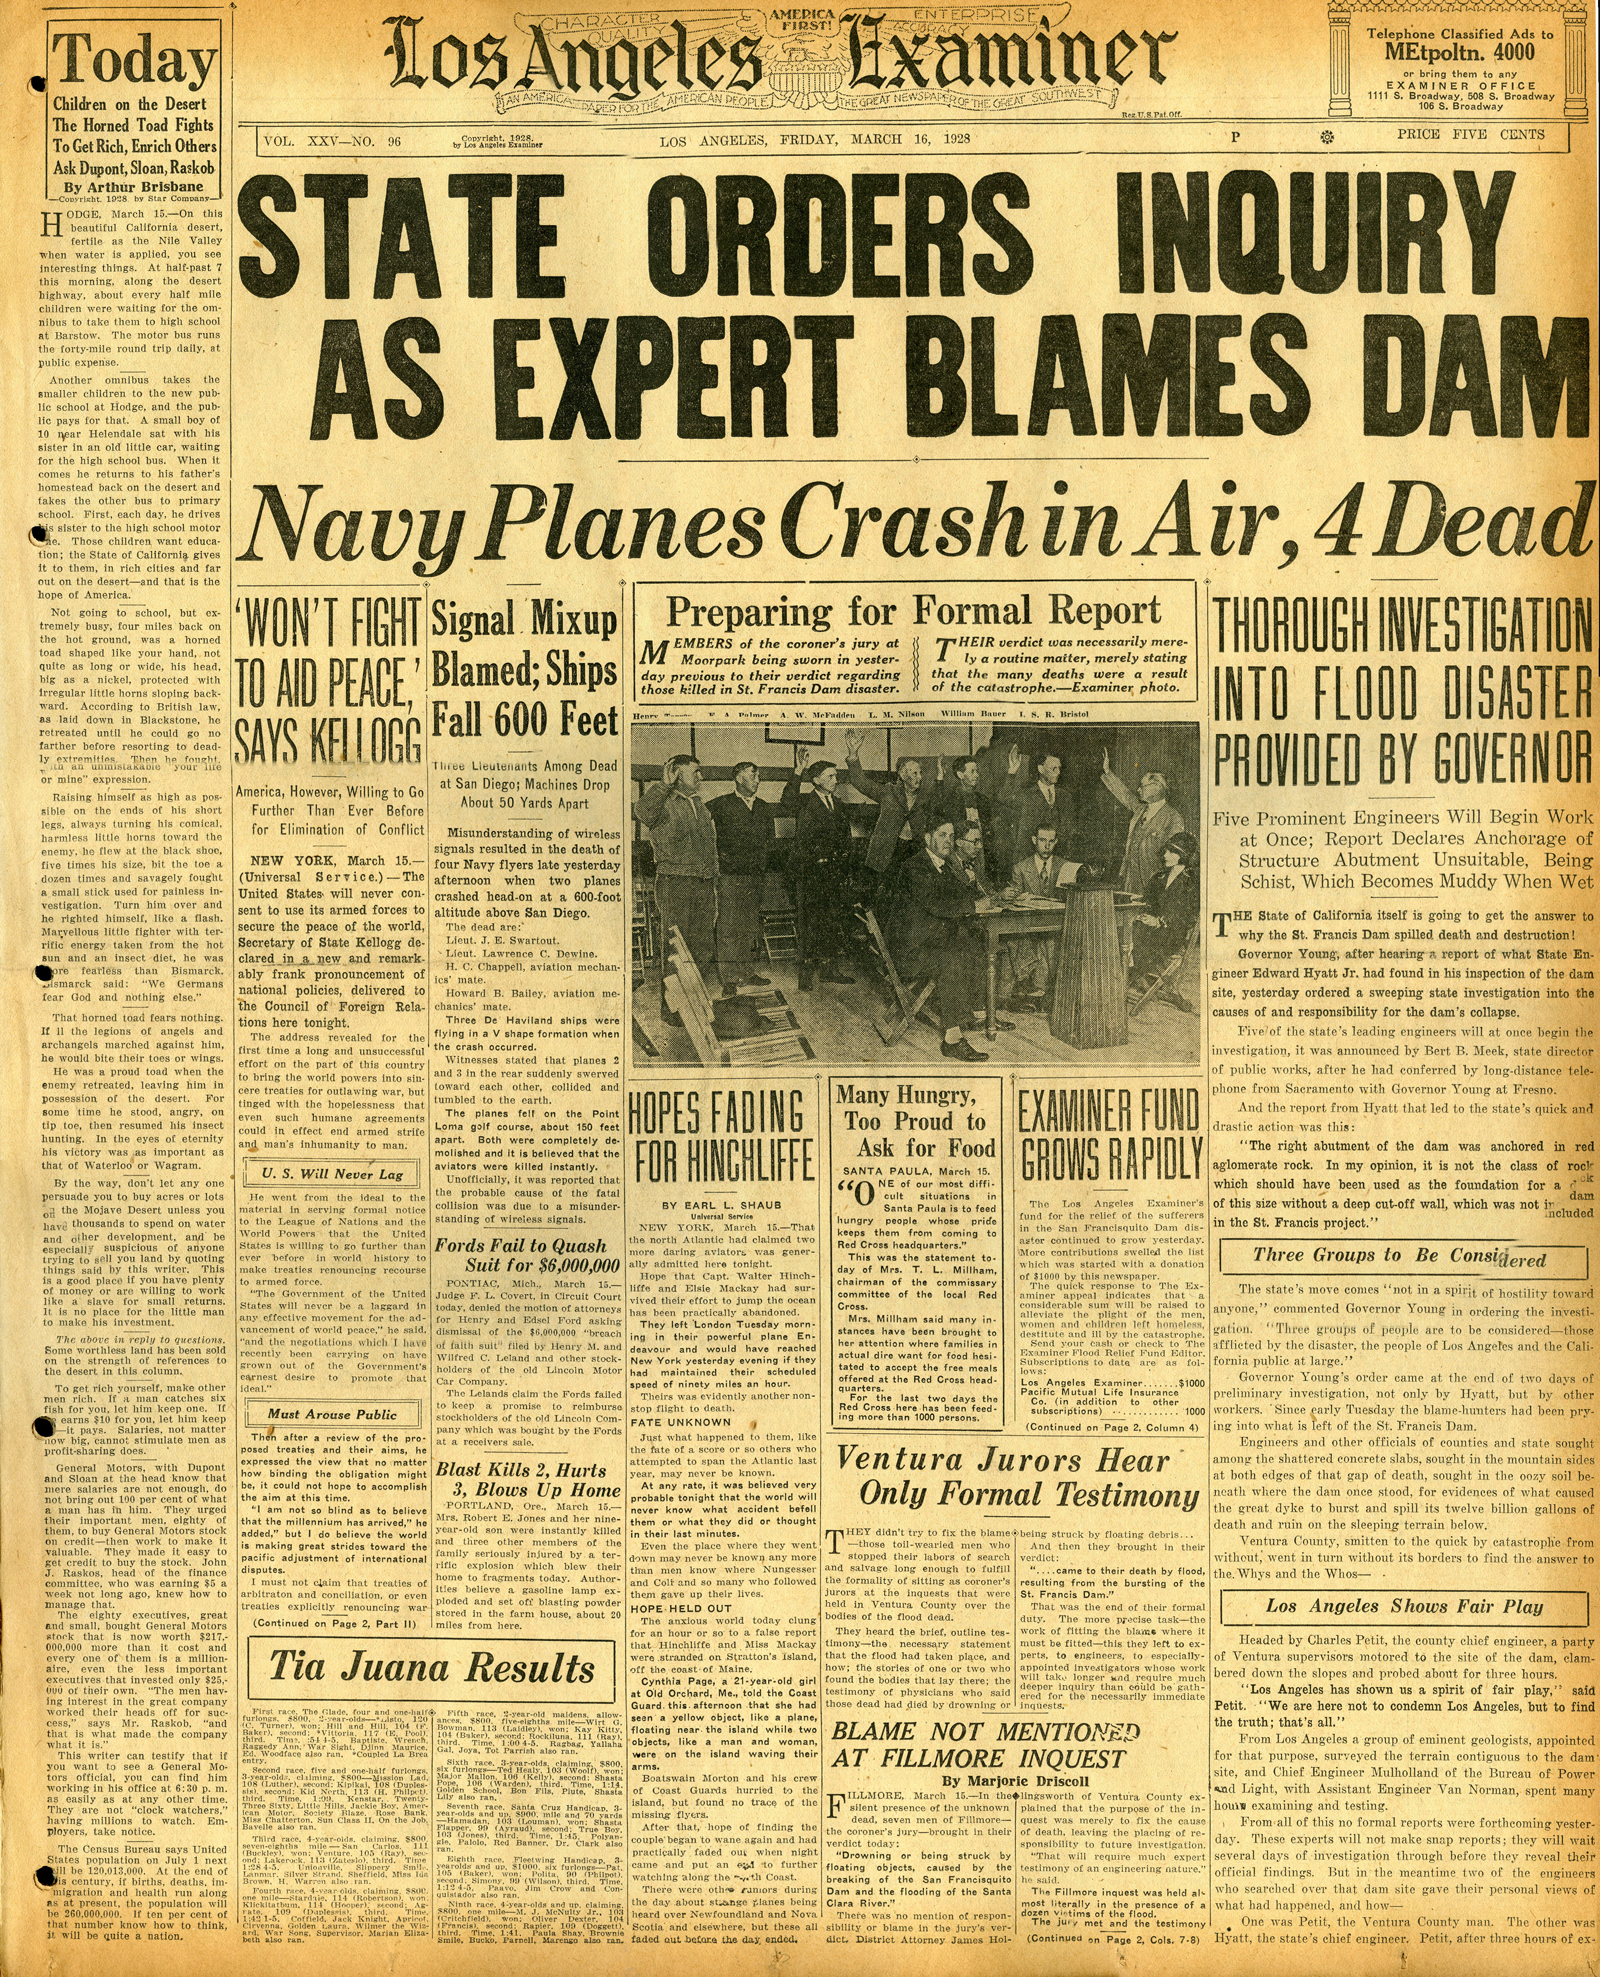 St. Francis Dam Disaster

LOS ANGELES EXAMINER

Los Angeles, California | Friday, March 16, 1928